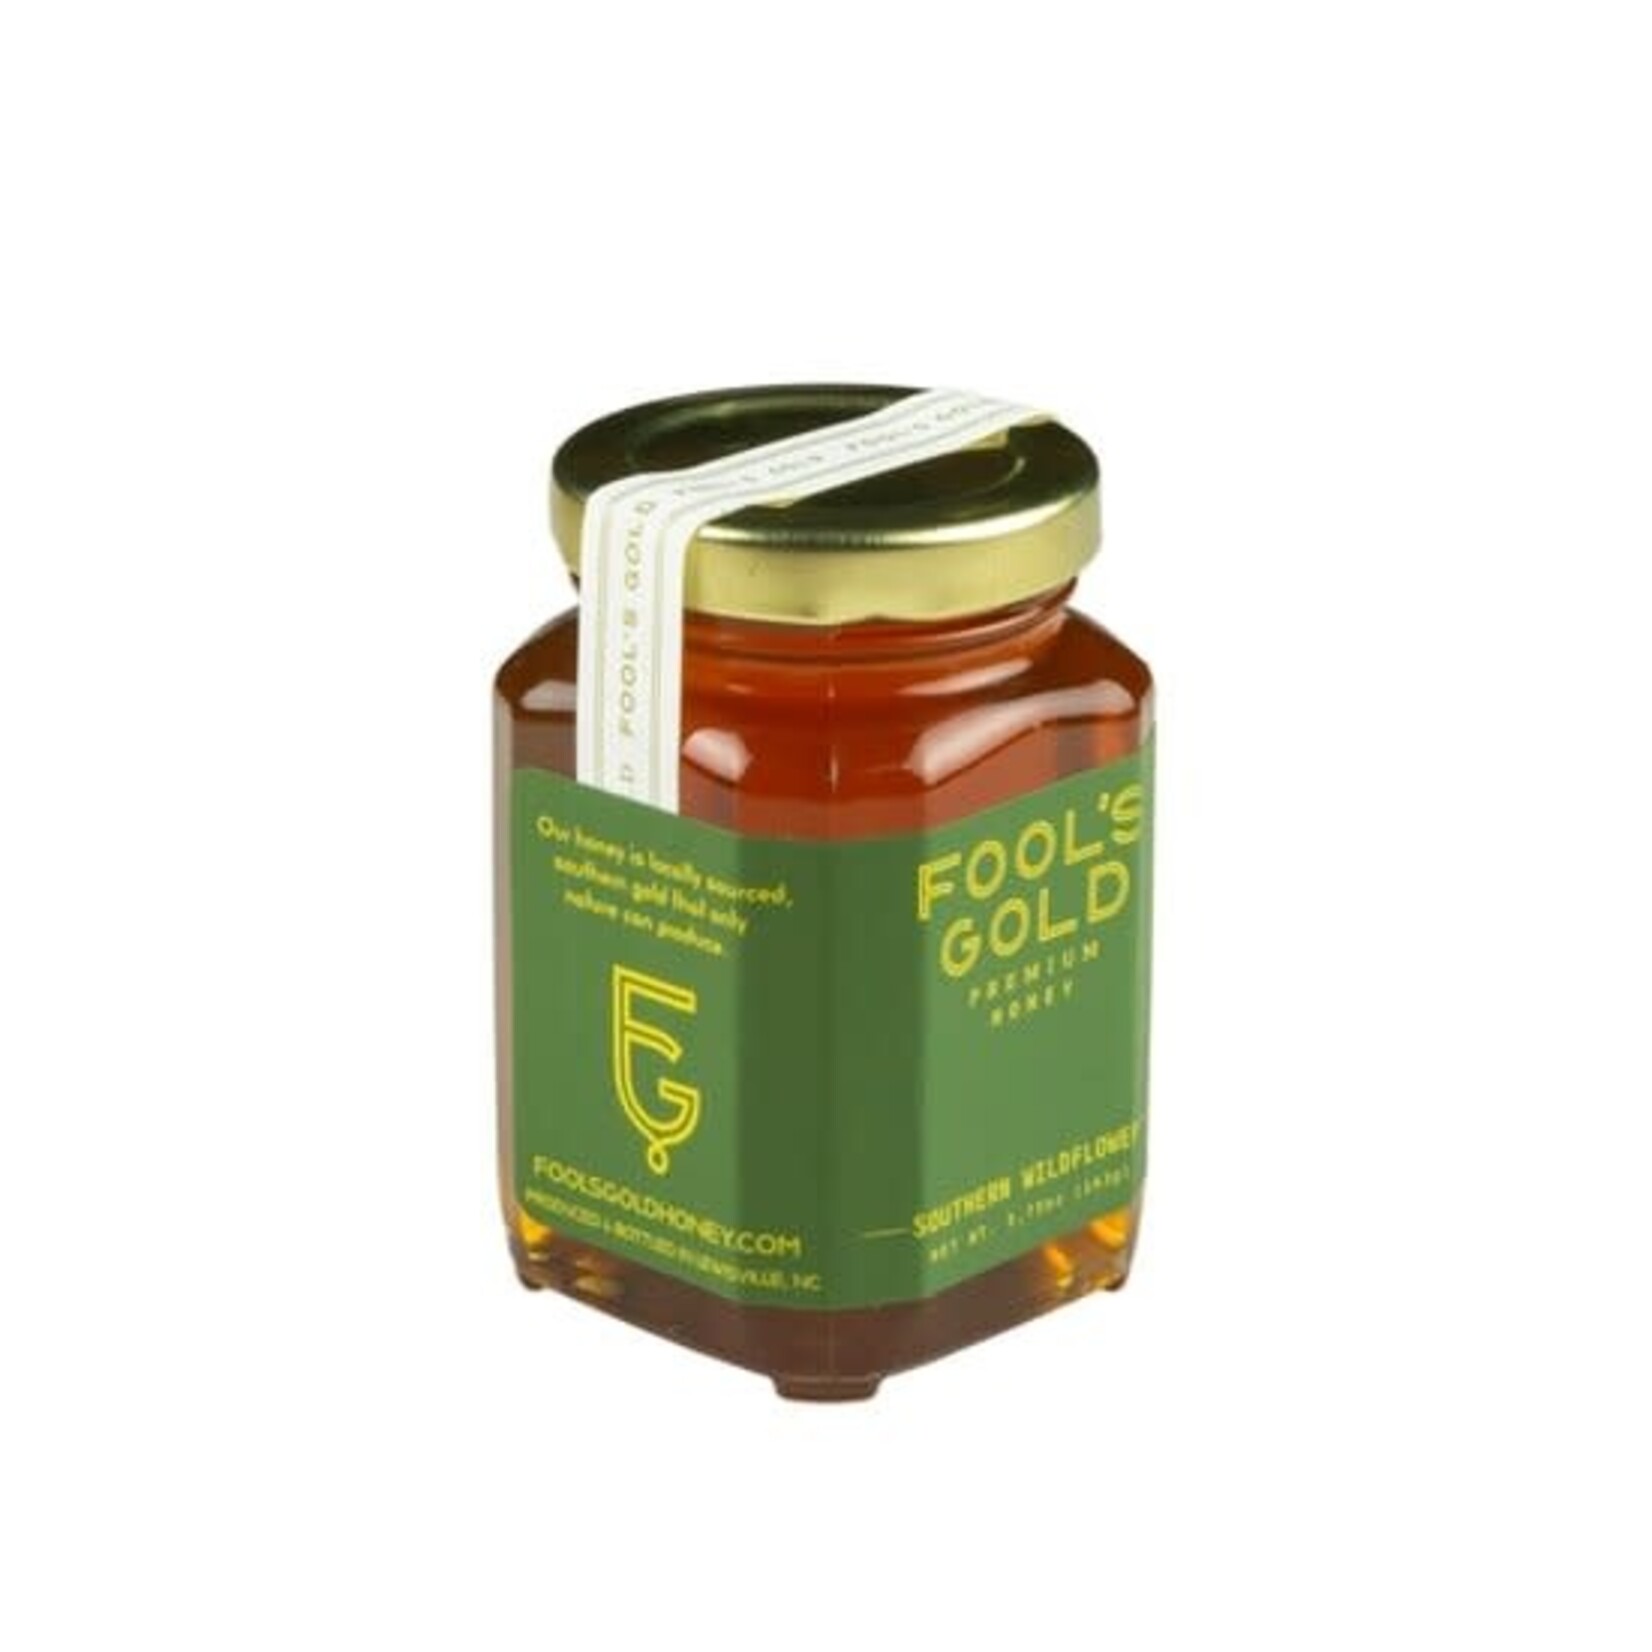 Fool's Gold Honey NC Honey Wildflower Infused 5.75 oz